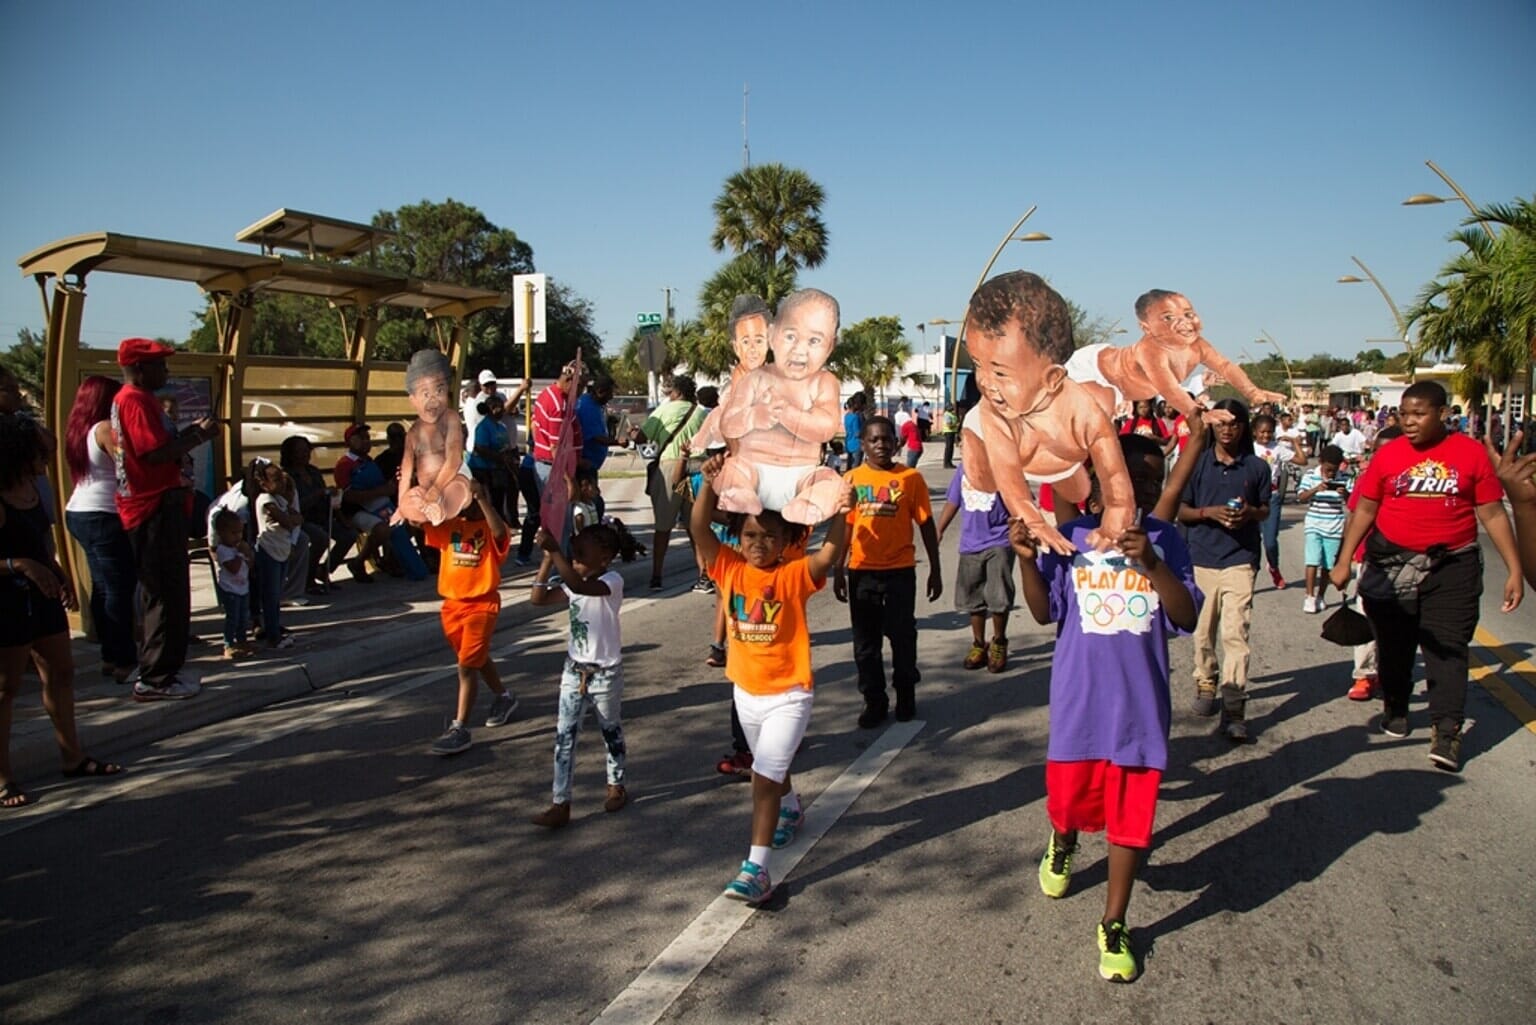 Festival, Parade, Gala Ft. Lauderdale, FL Sistrunk Historical